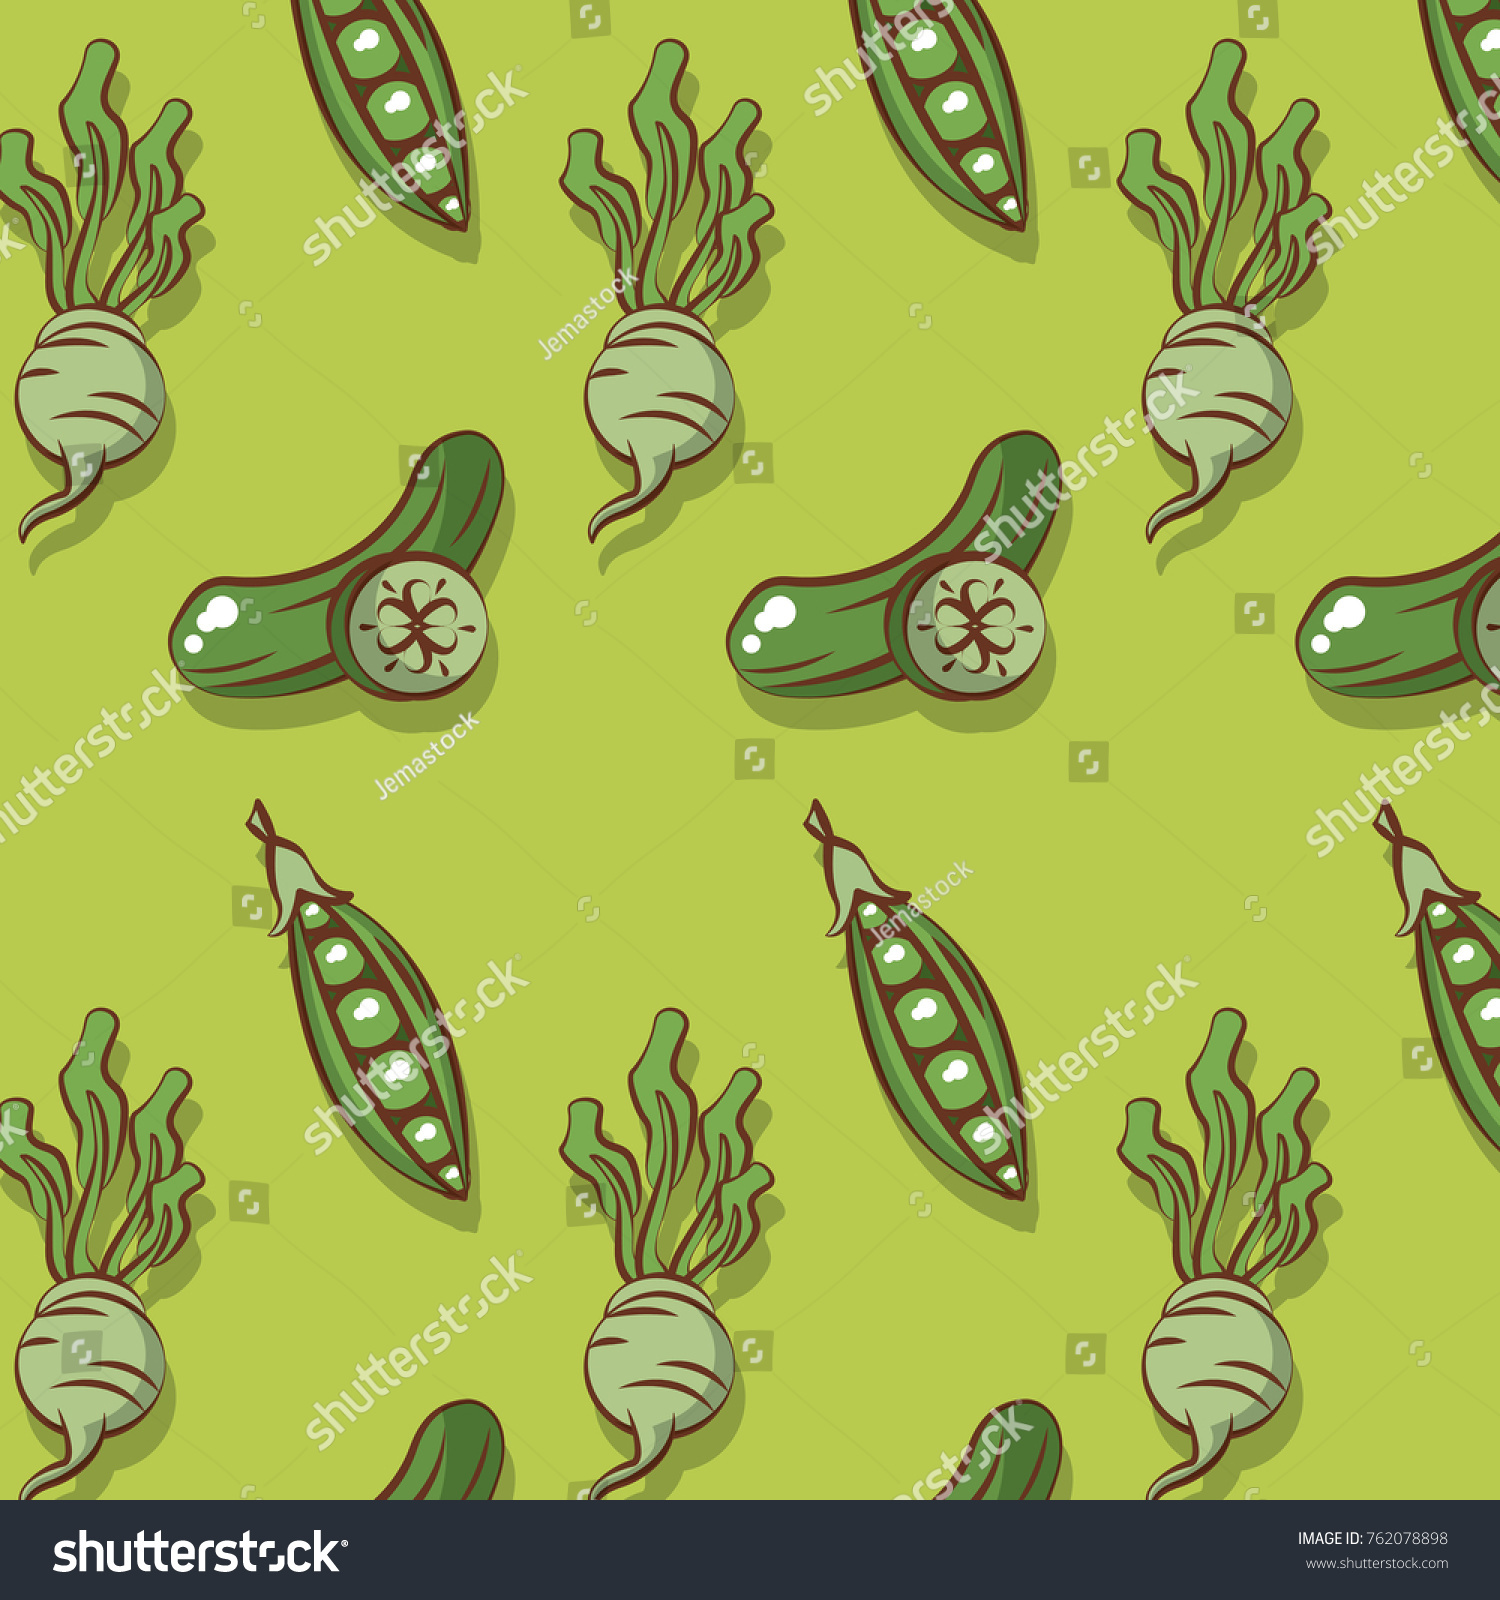 Cucumber and radish background #762078898